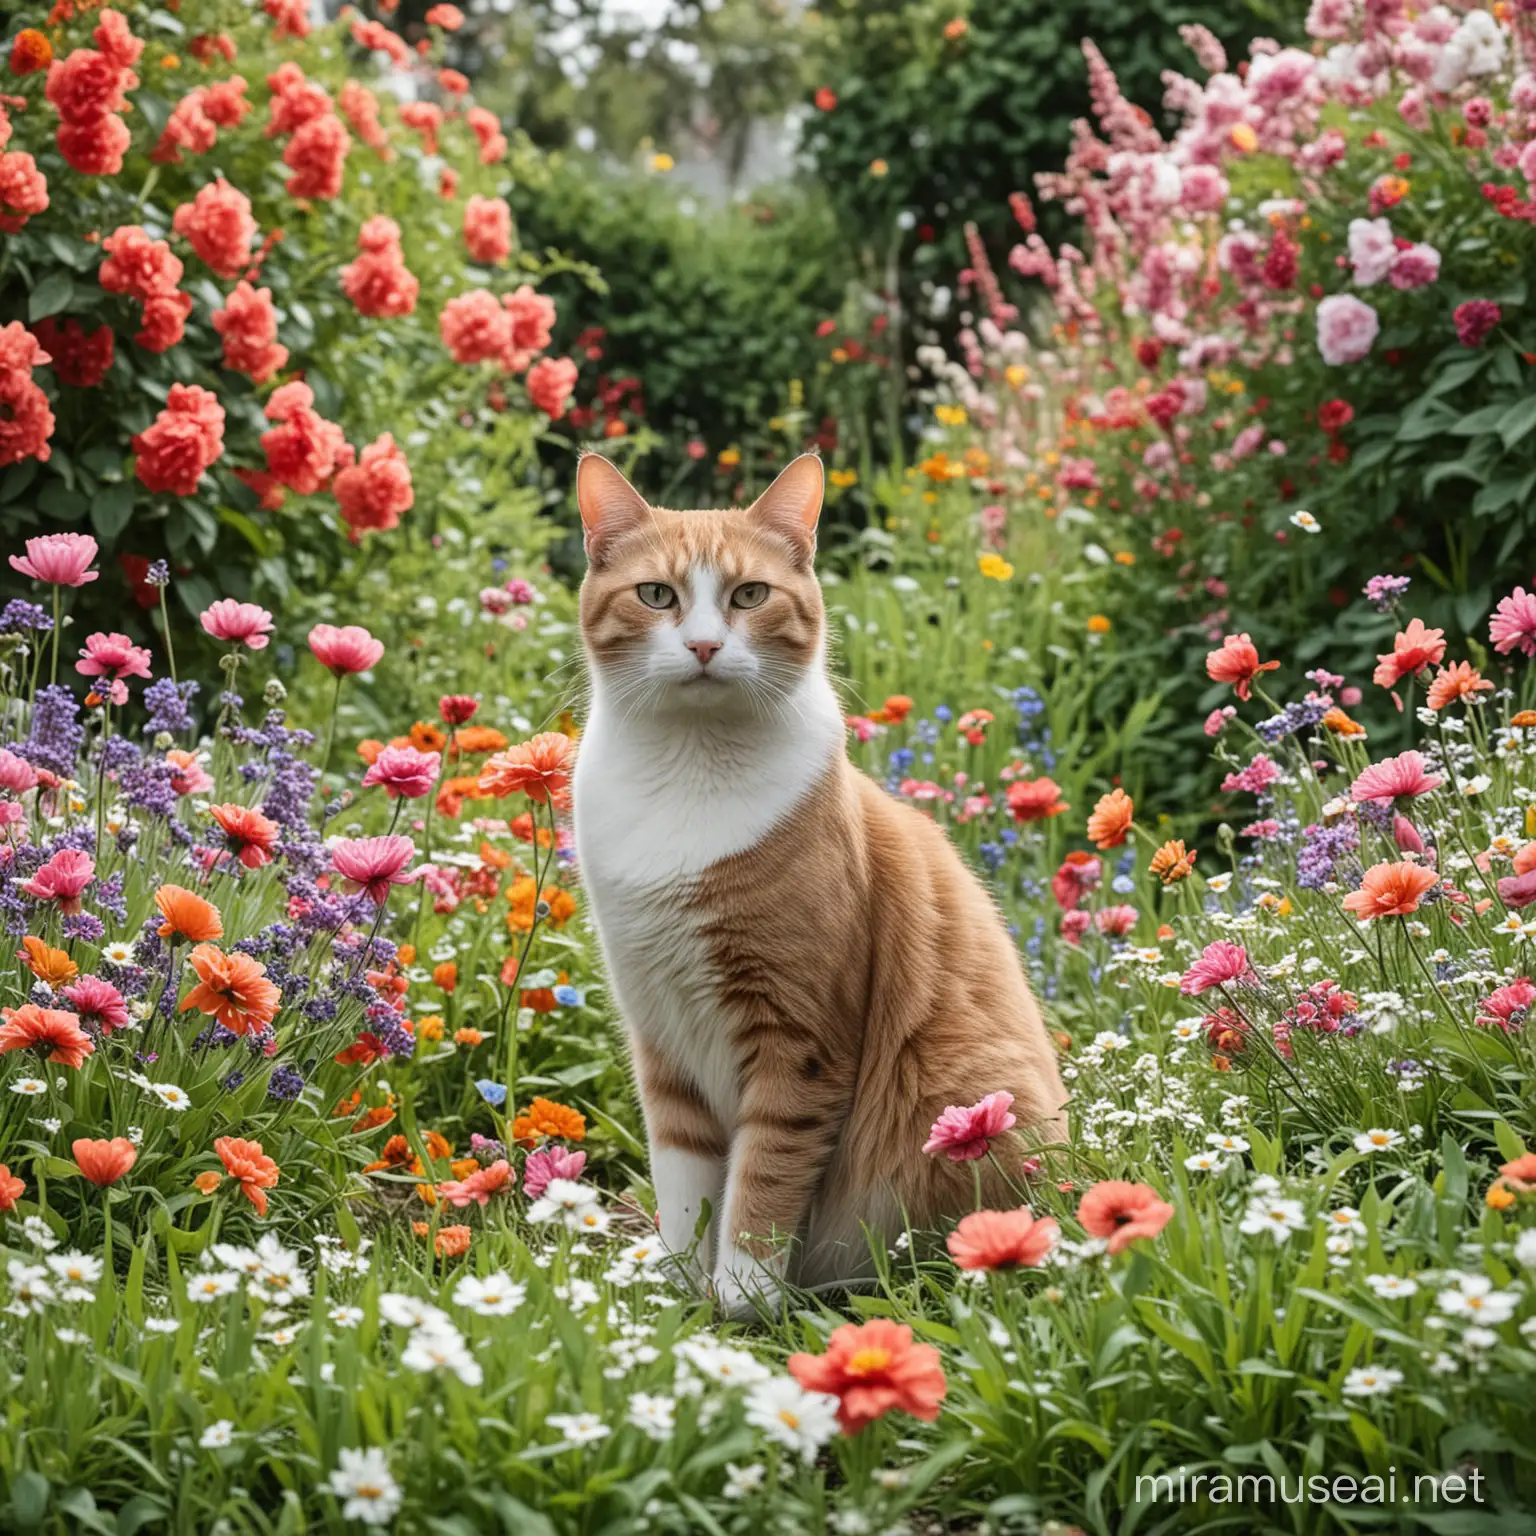 Cat in a FlowerFilled Garden